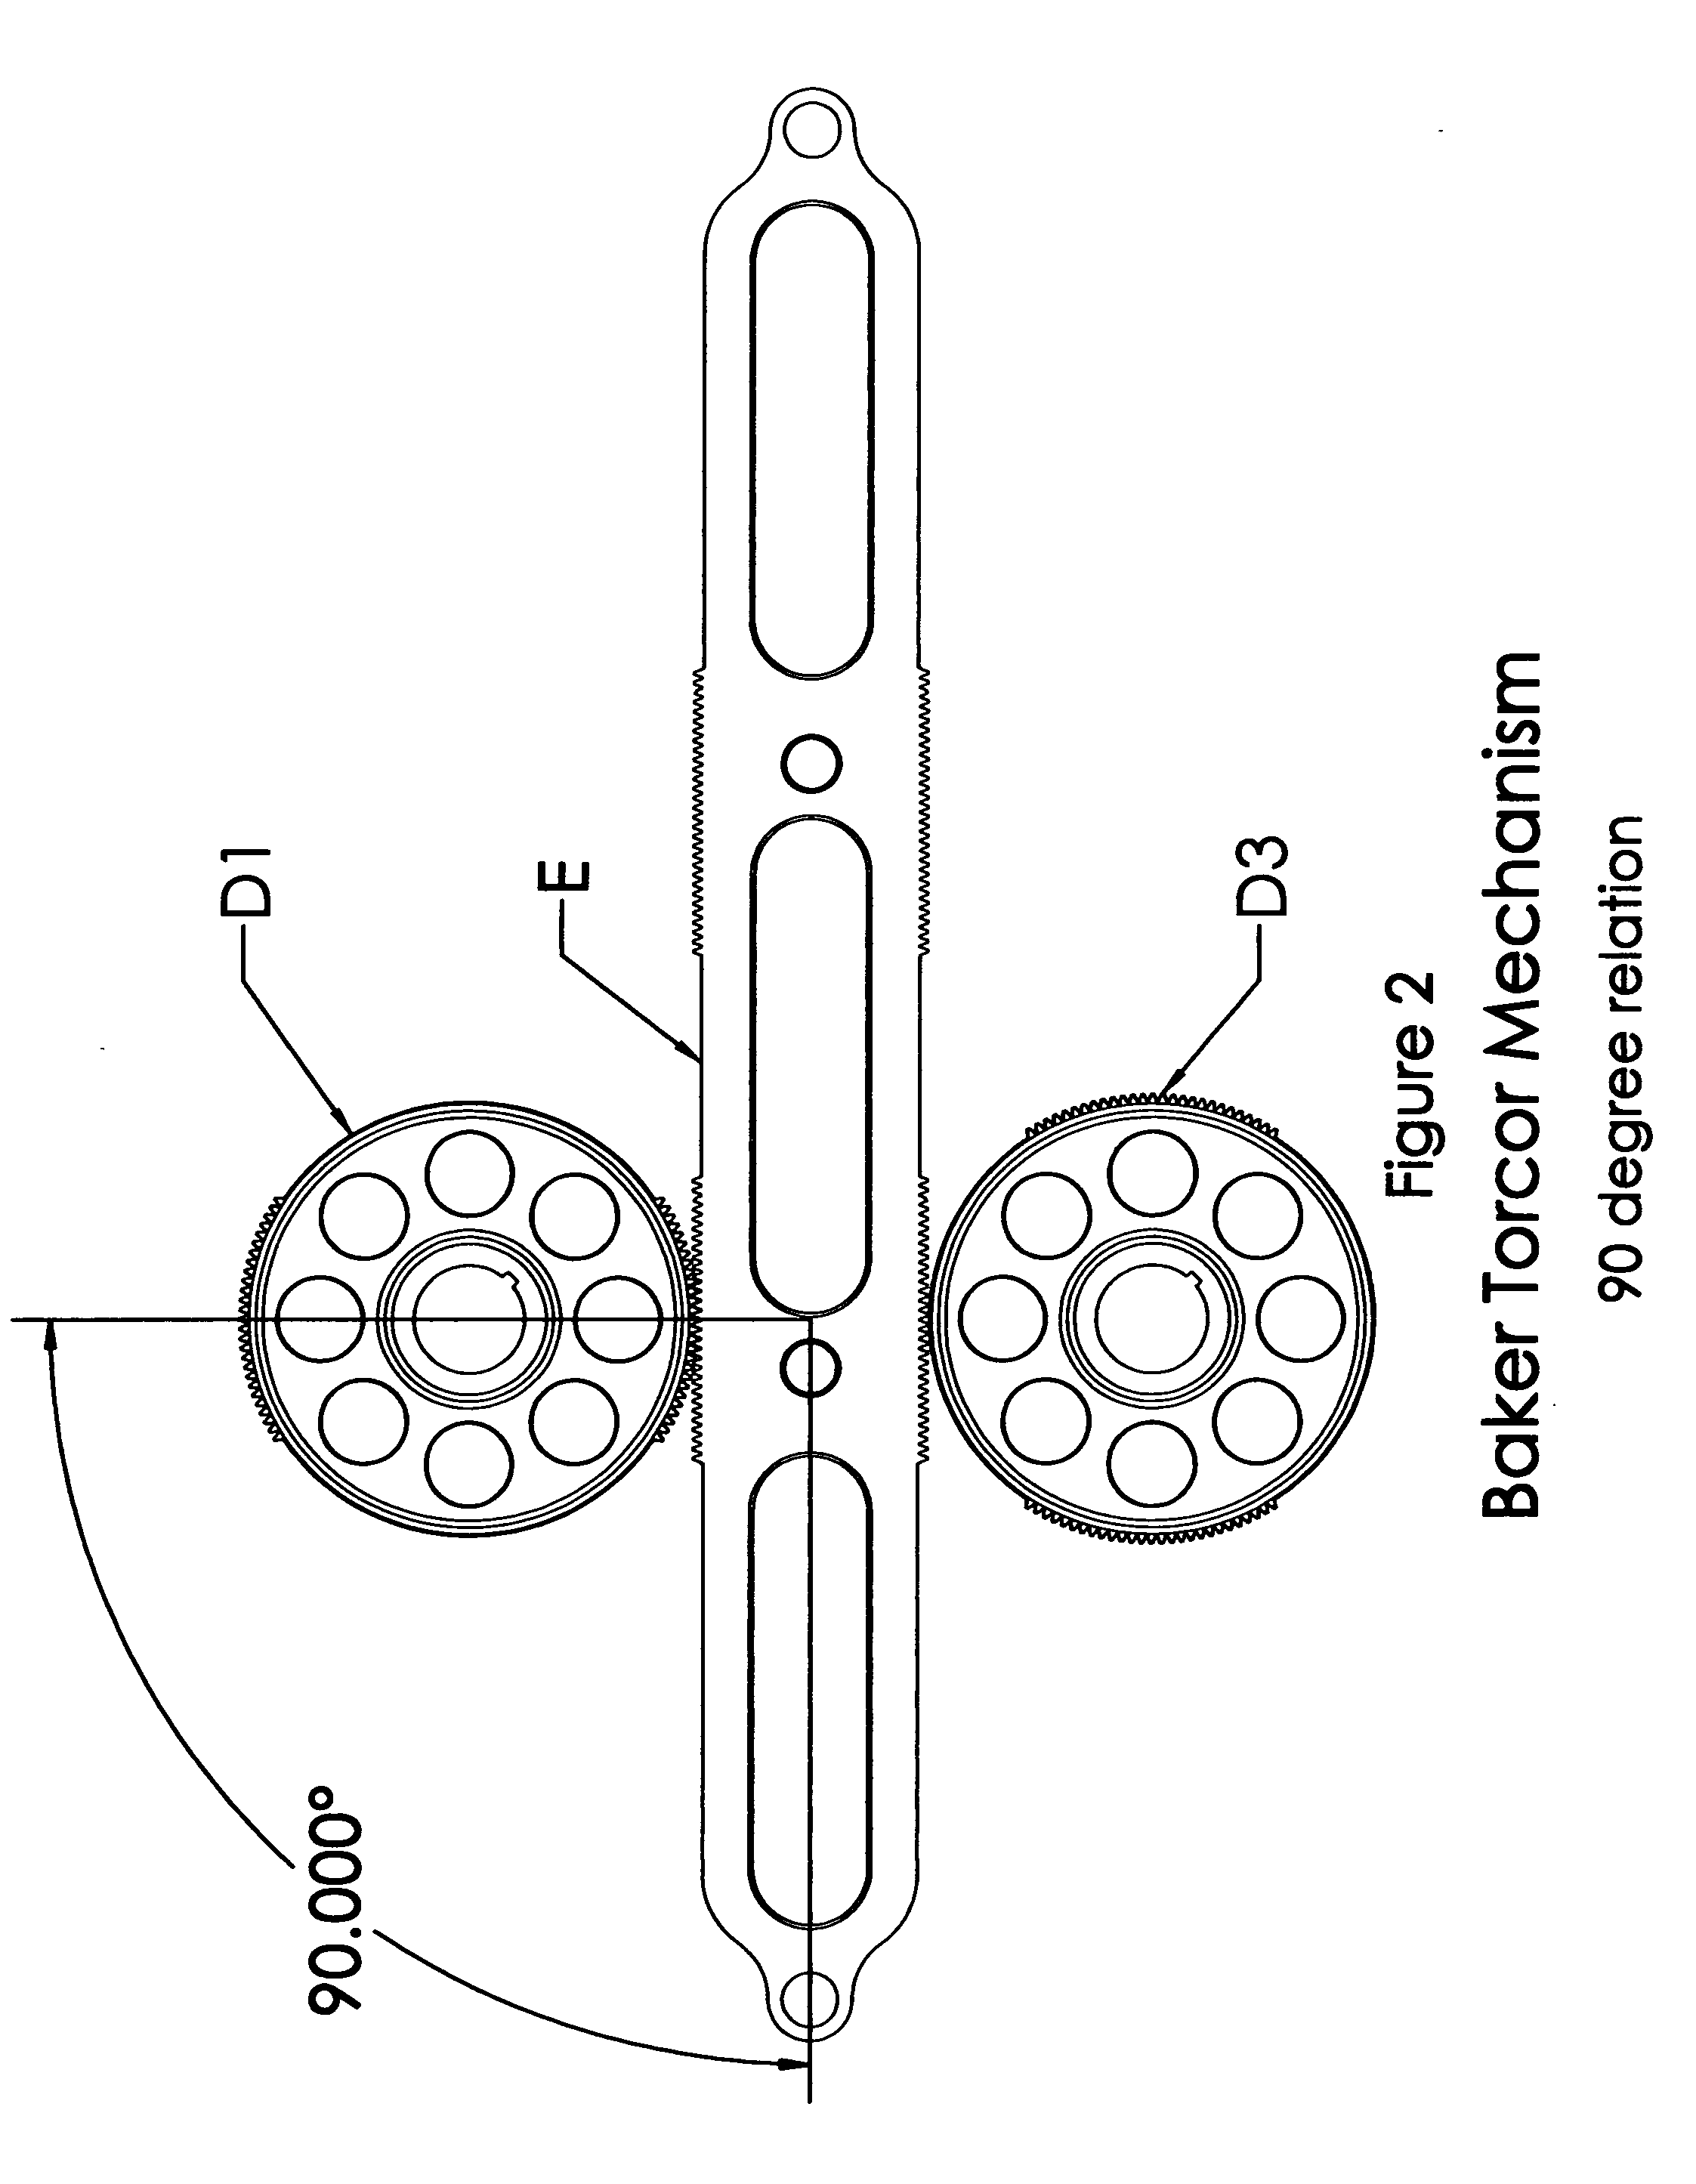 Baker Torcor motion conversion mechanism